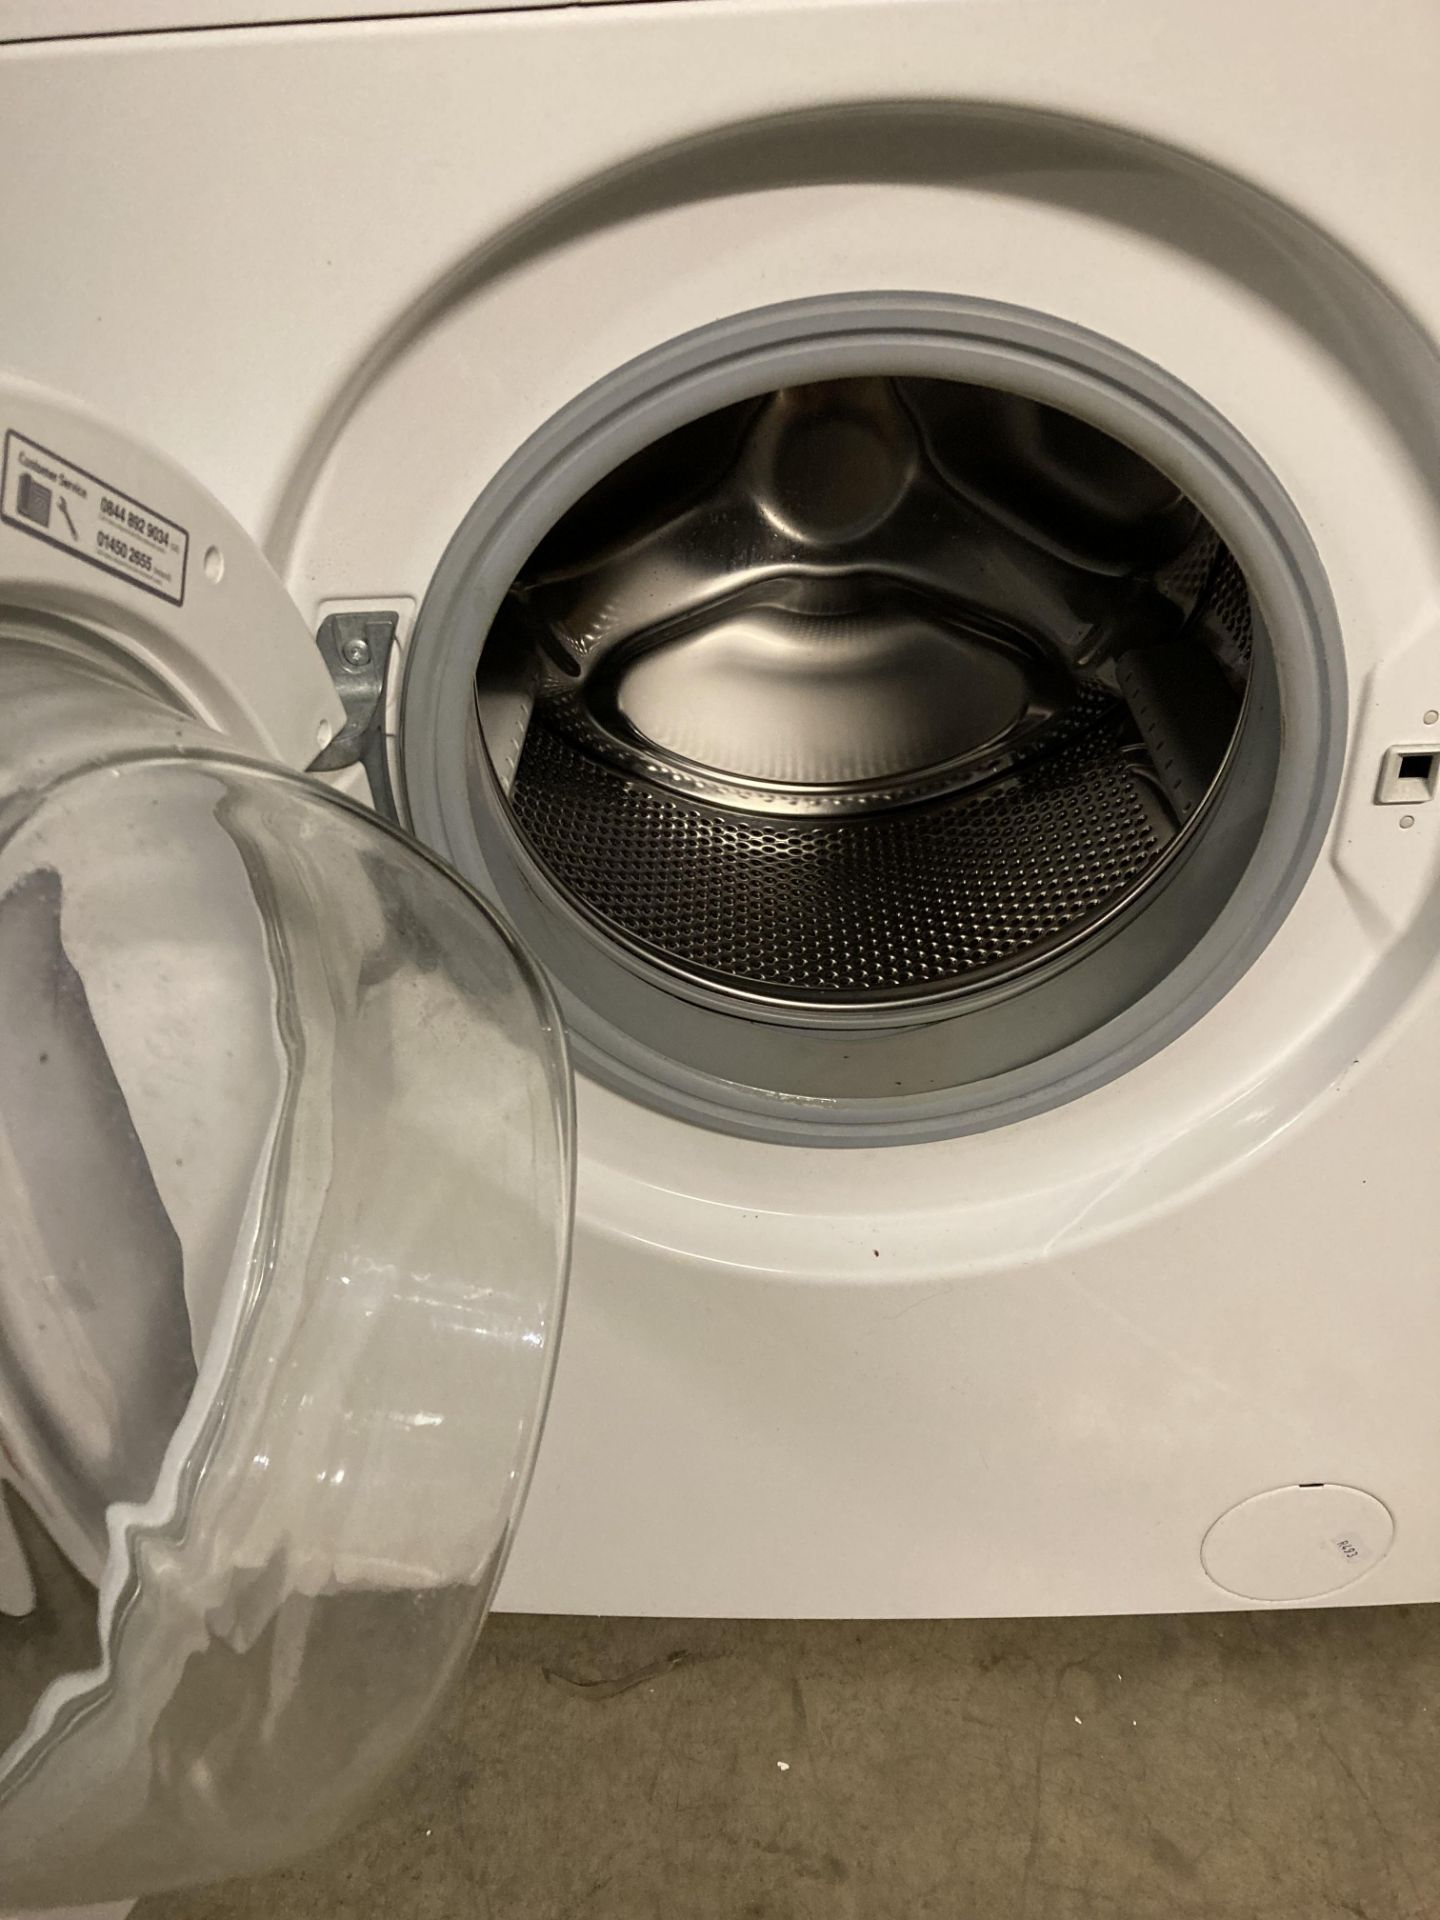 Bosch Maxx 1200 spin washing machine model: FD9402 - 240v (saleroom location: PO) - Image 2 of 2